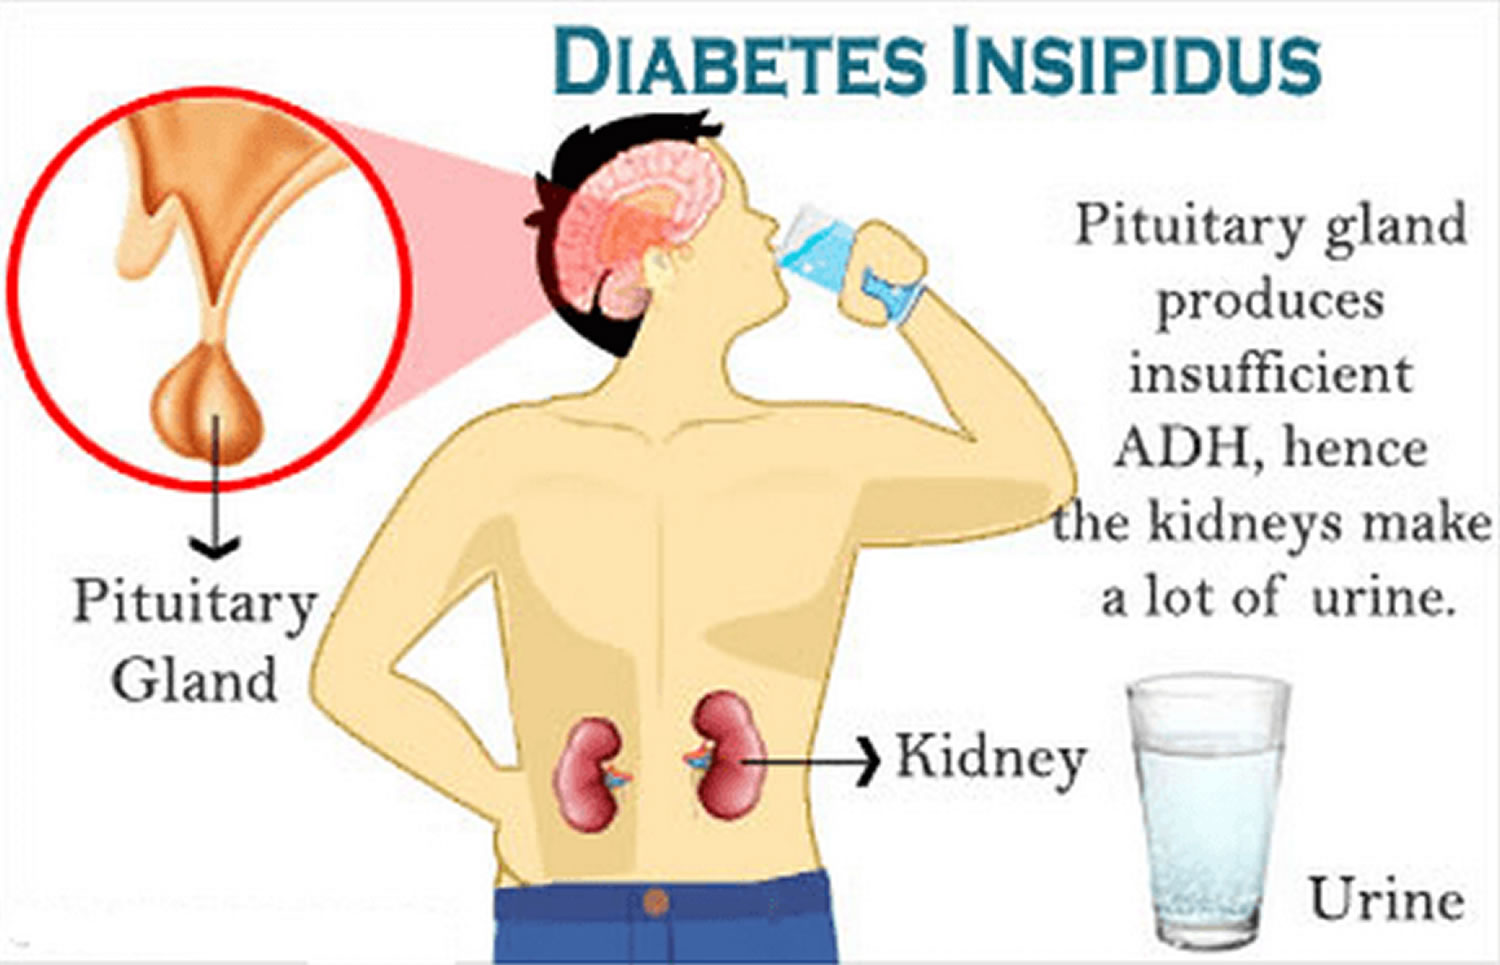 central diabetes insipidus anterior pituitary gland)